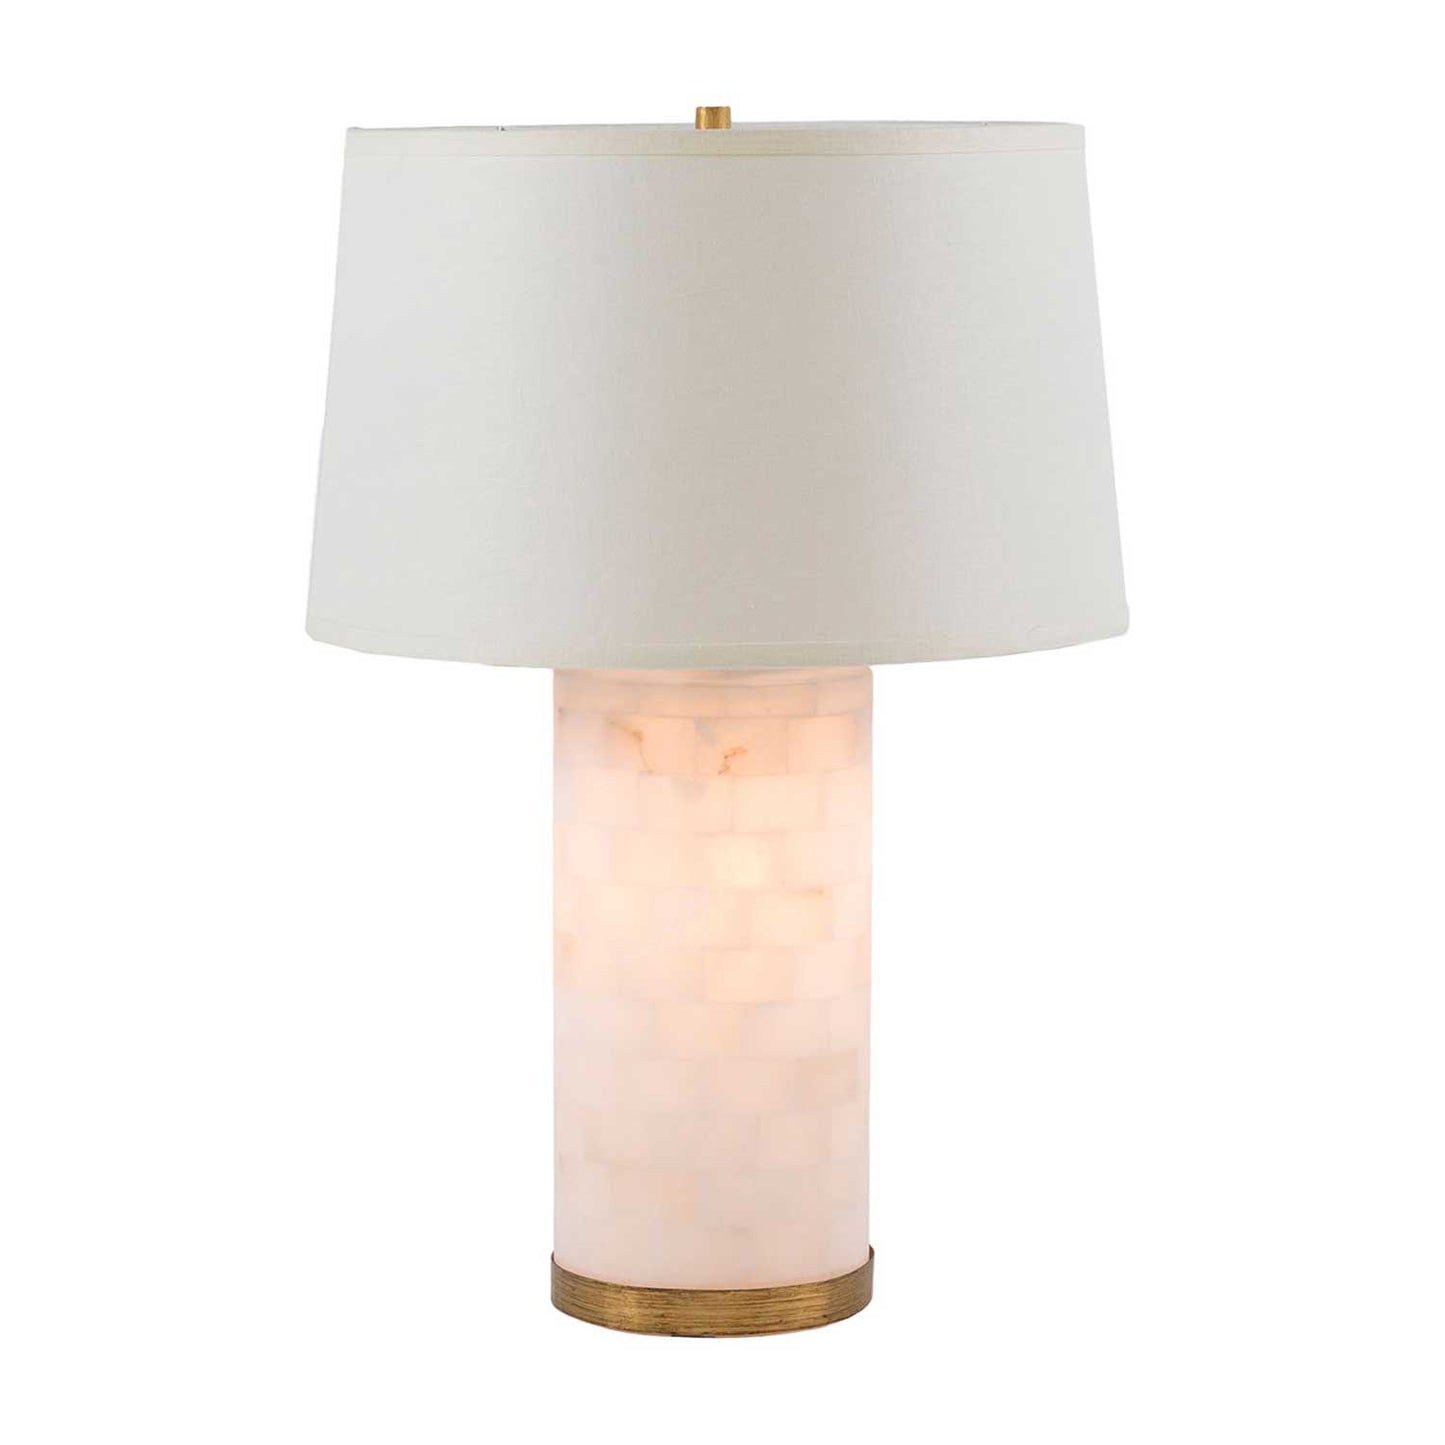 Alabaster Nightlight Lamp